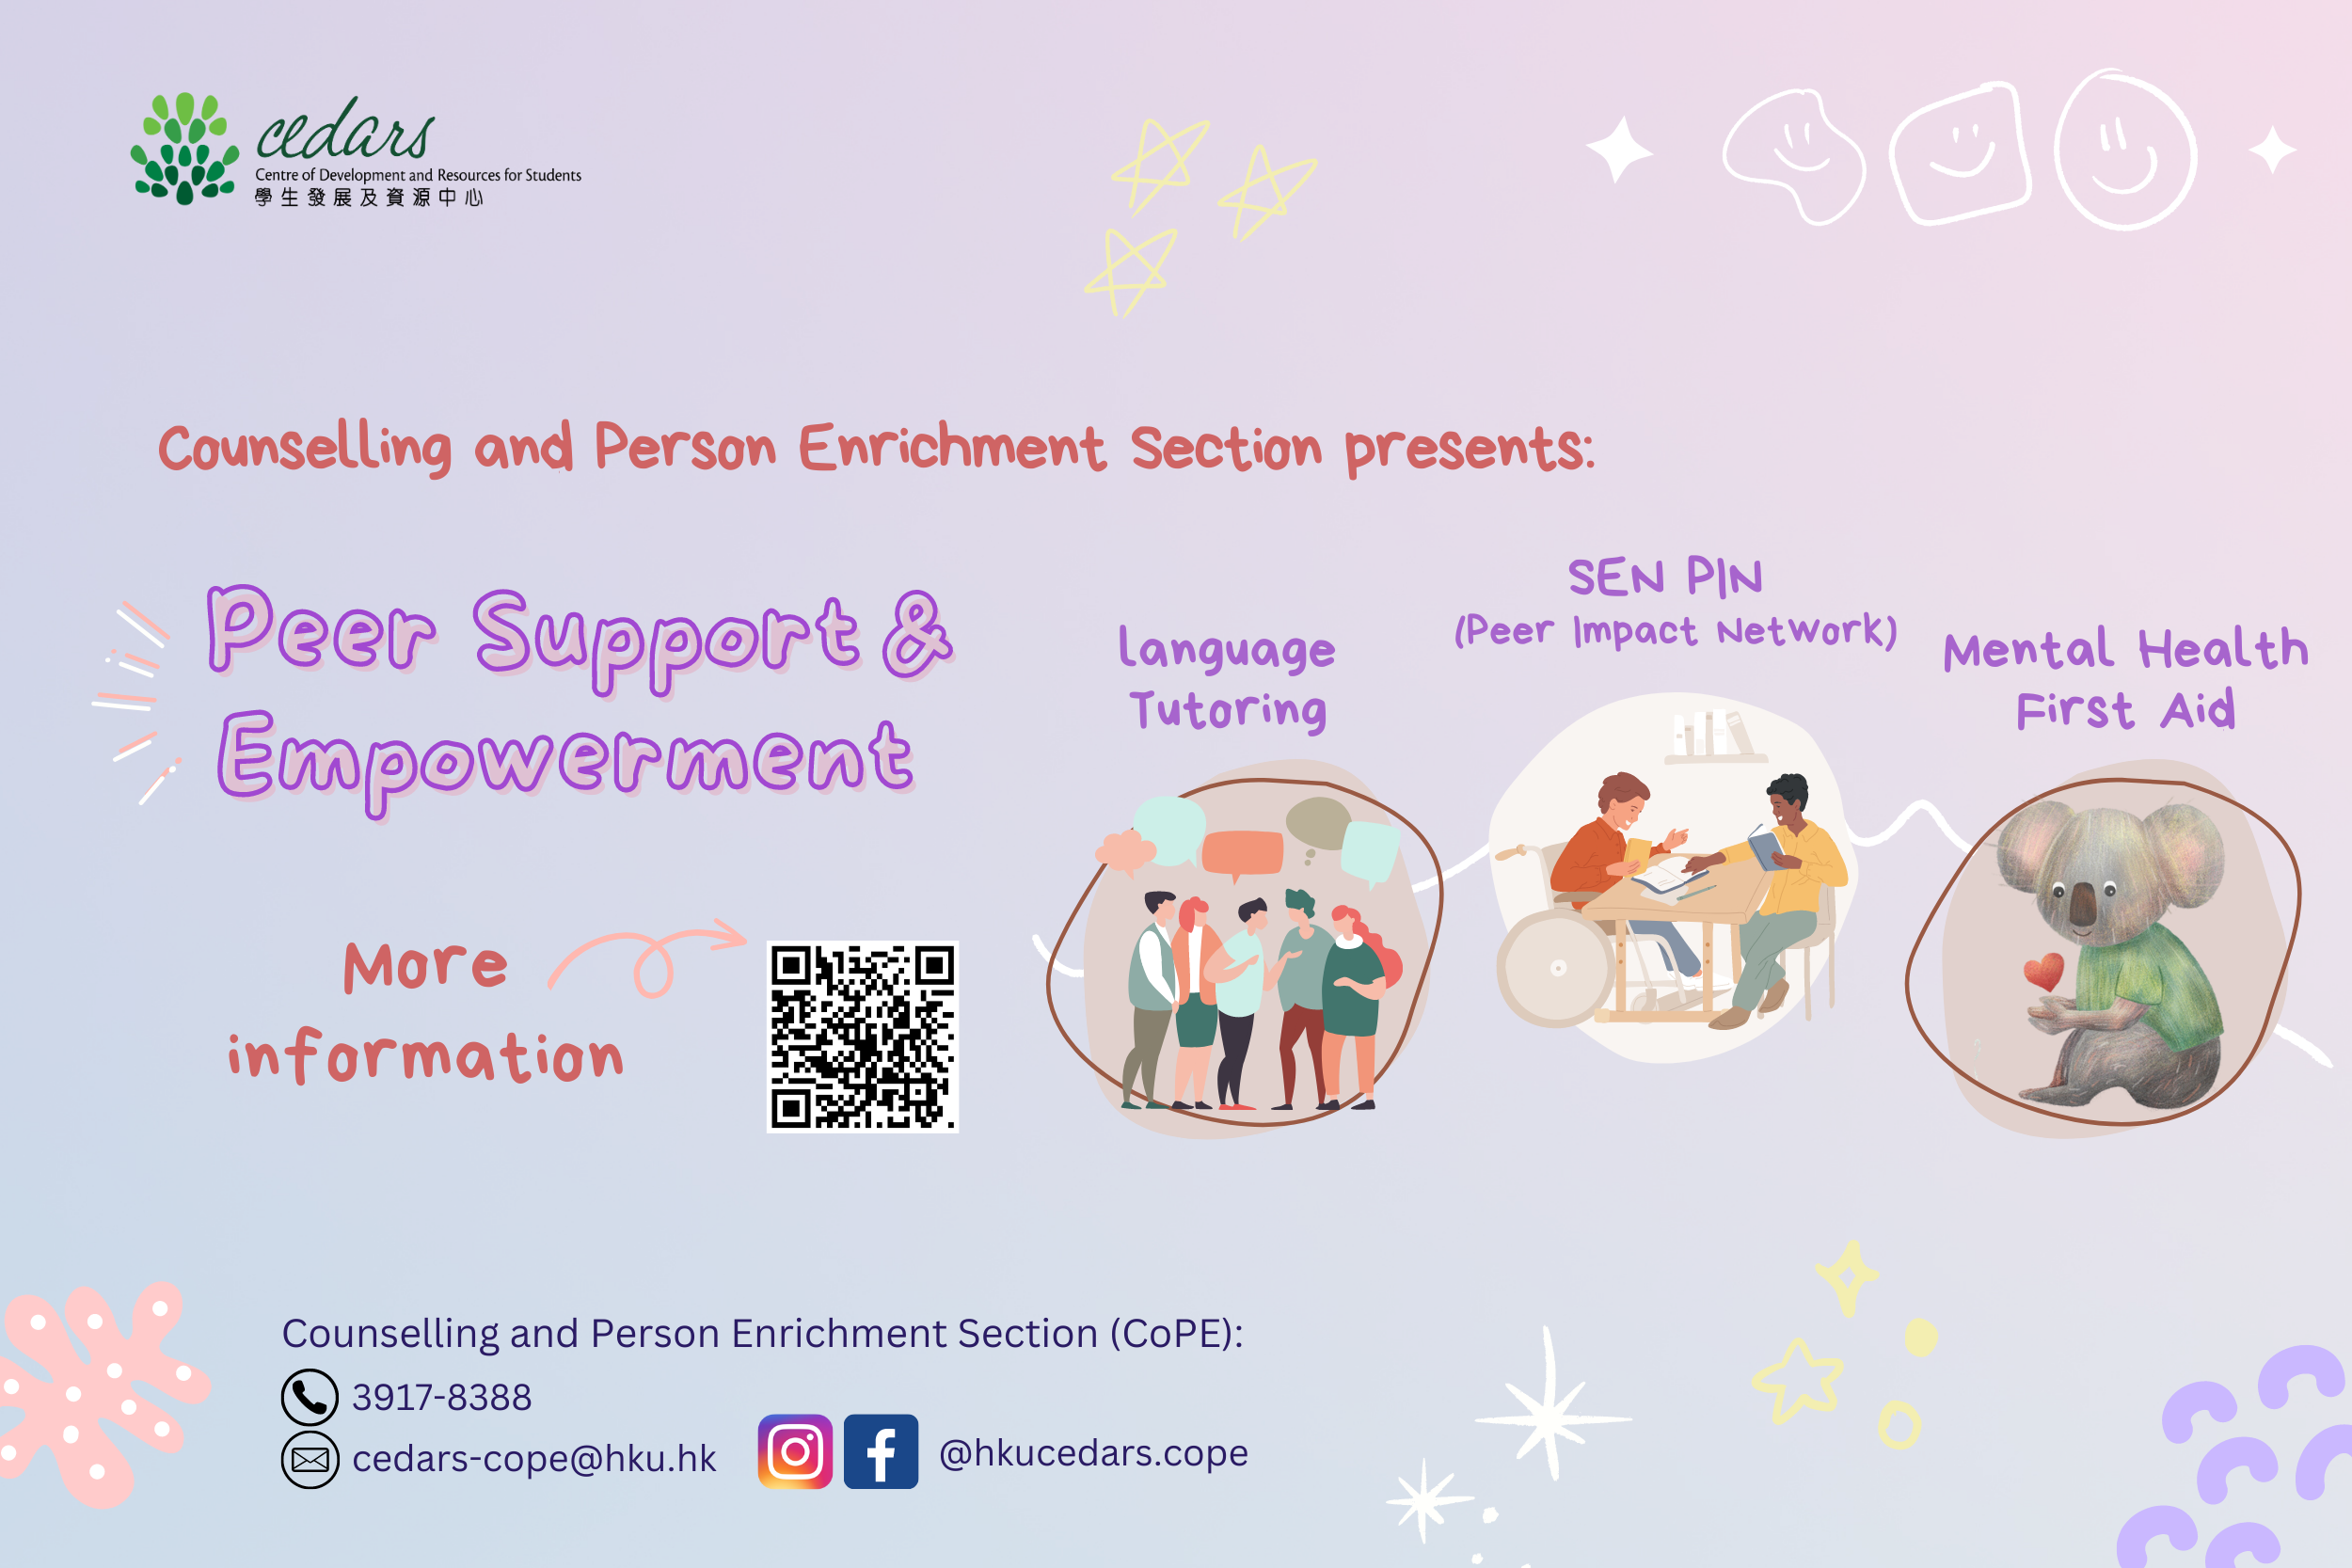 CEDARS CoPE presents: Peer Support & Empowerment 23 - 24 